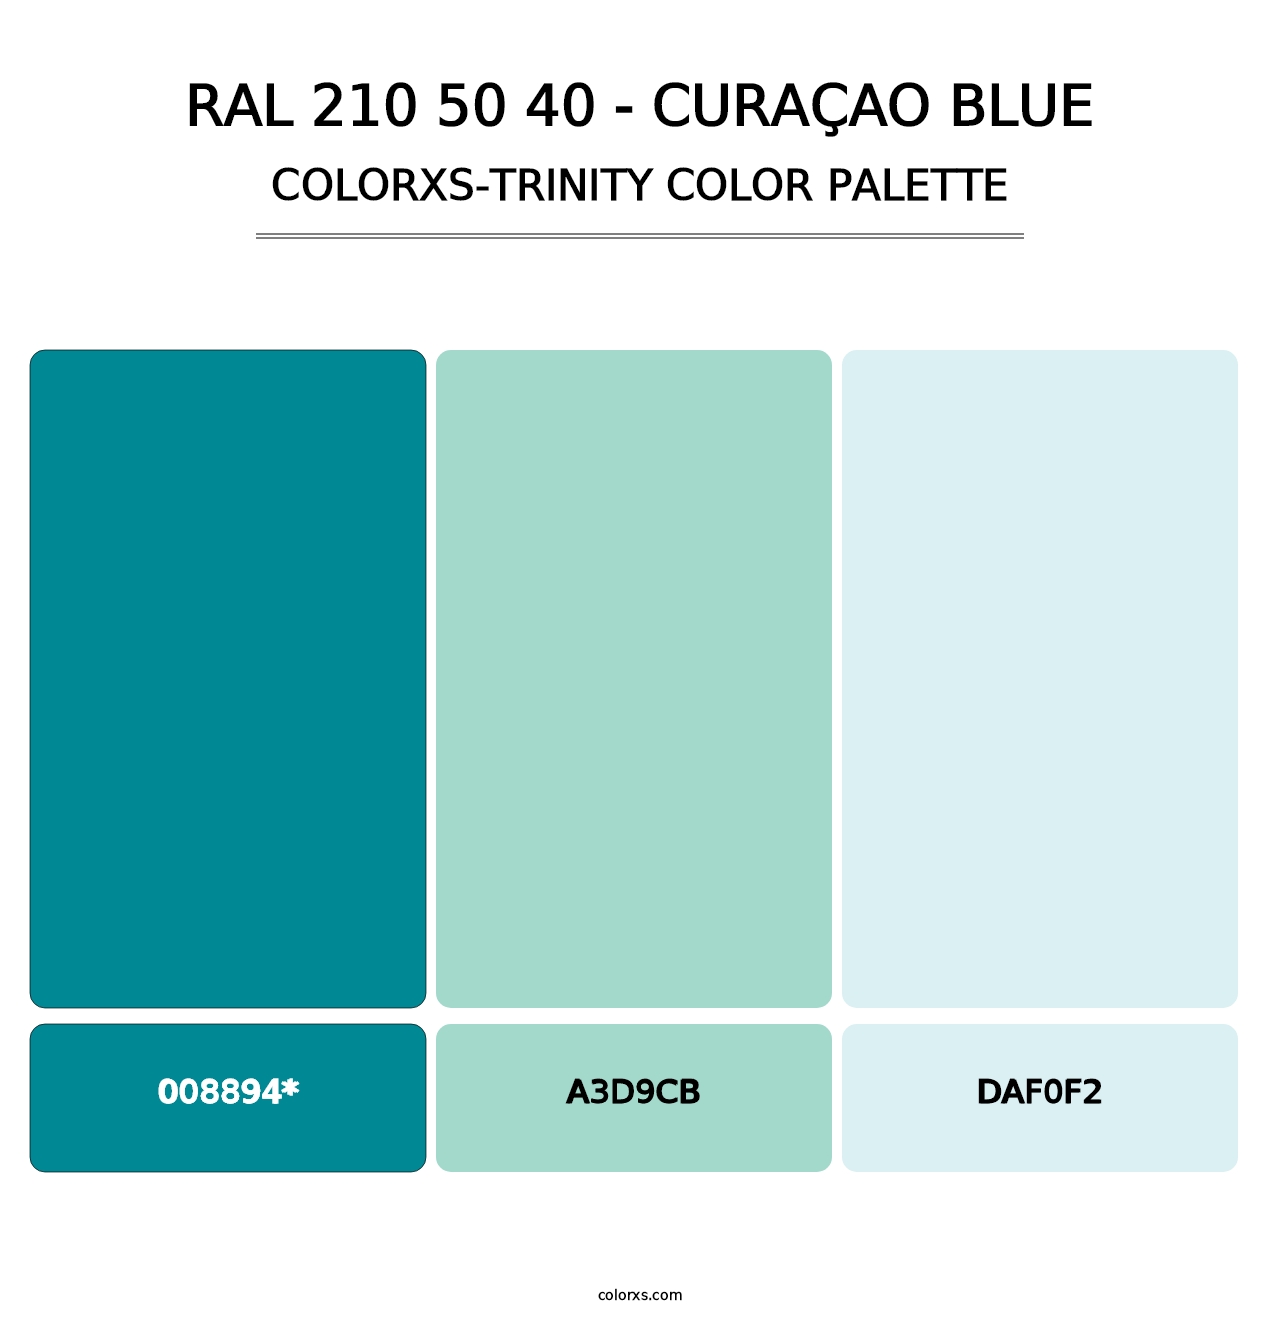 RAL 210 50 40 - Curaçao Blue - Colorxs Trinity Palette